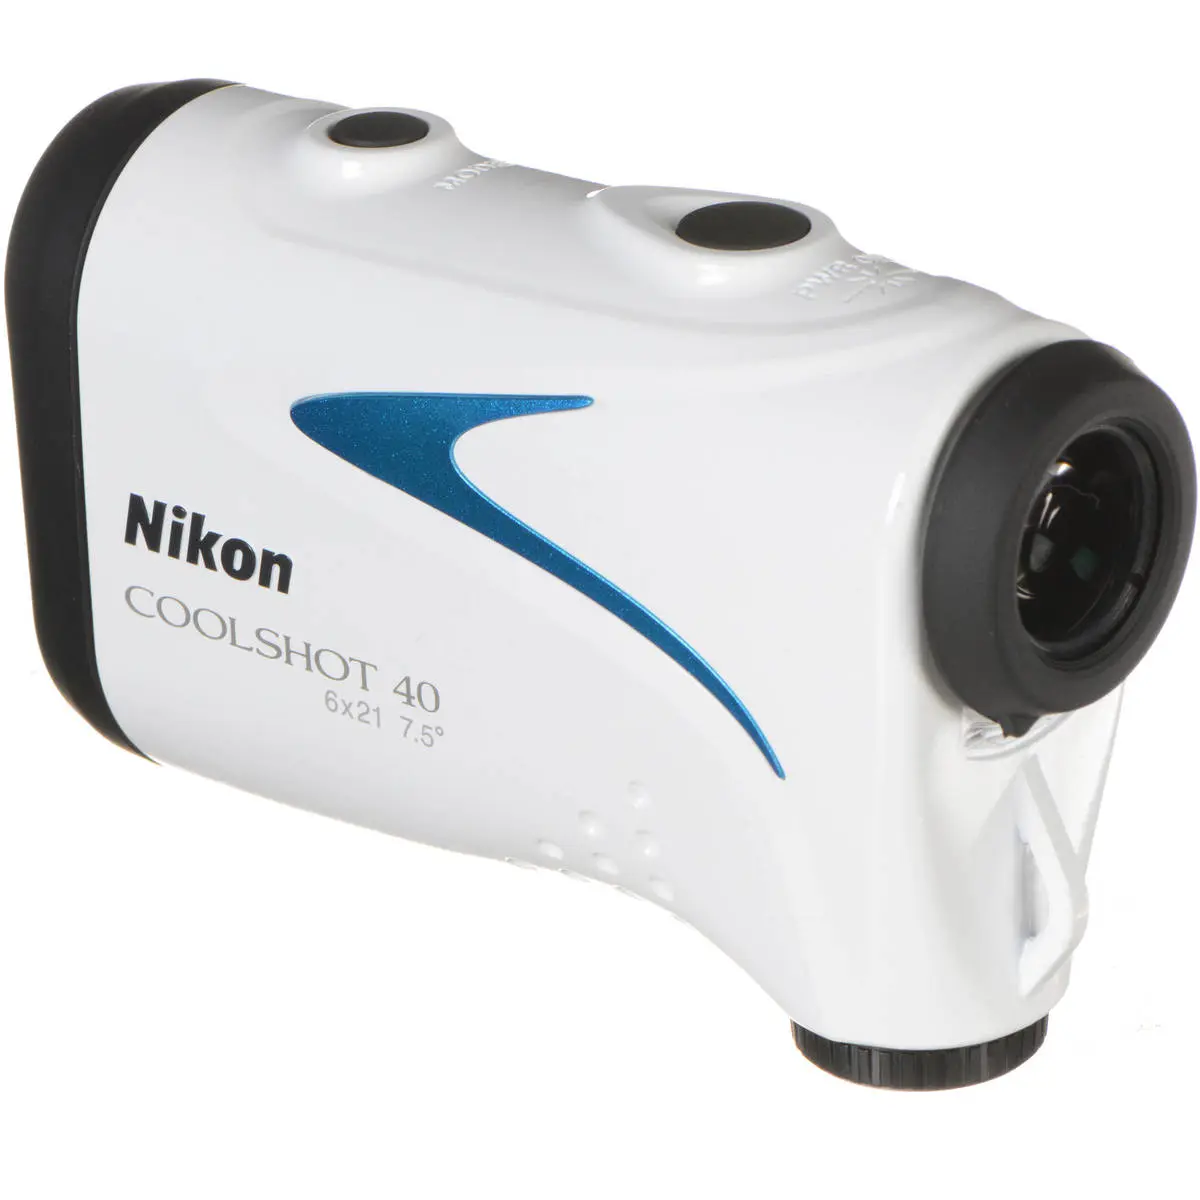 2. Nikon Coolshot 40 Golf Laser Rangefinder